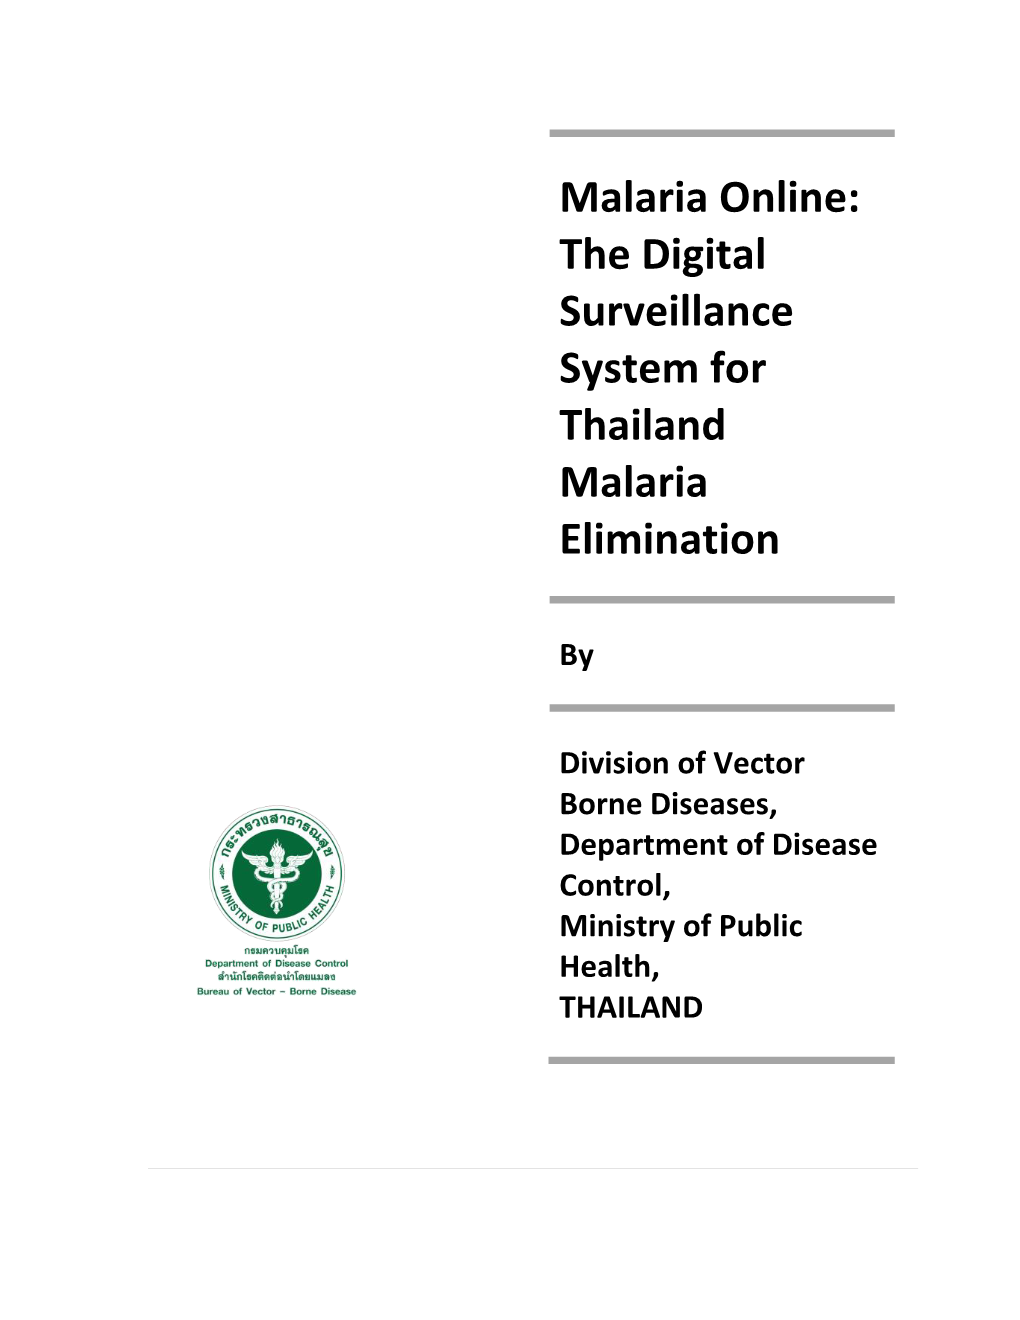 The Digital Surveillance System for Thailand Malaria Elimination